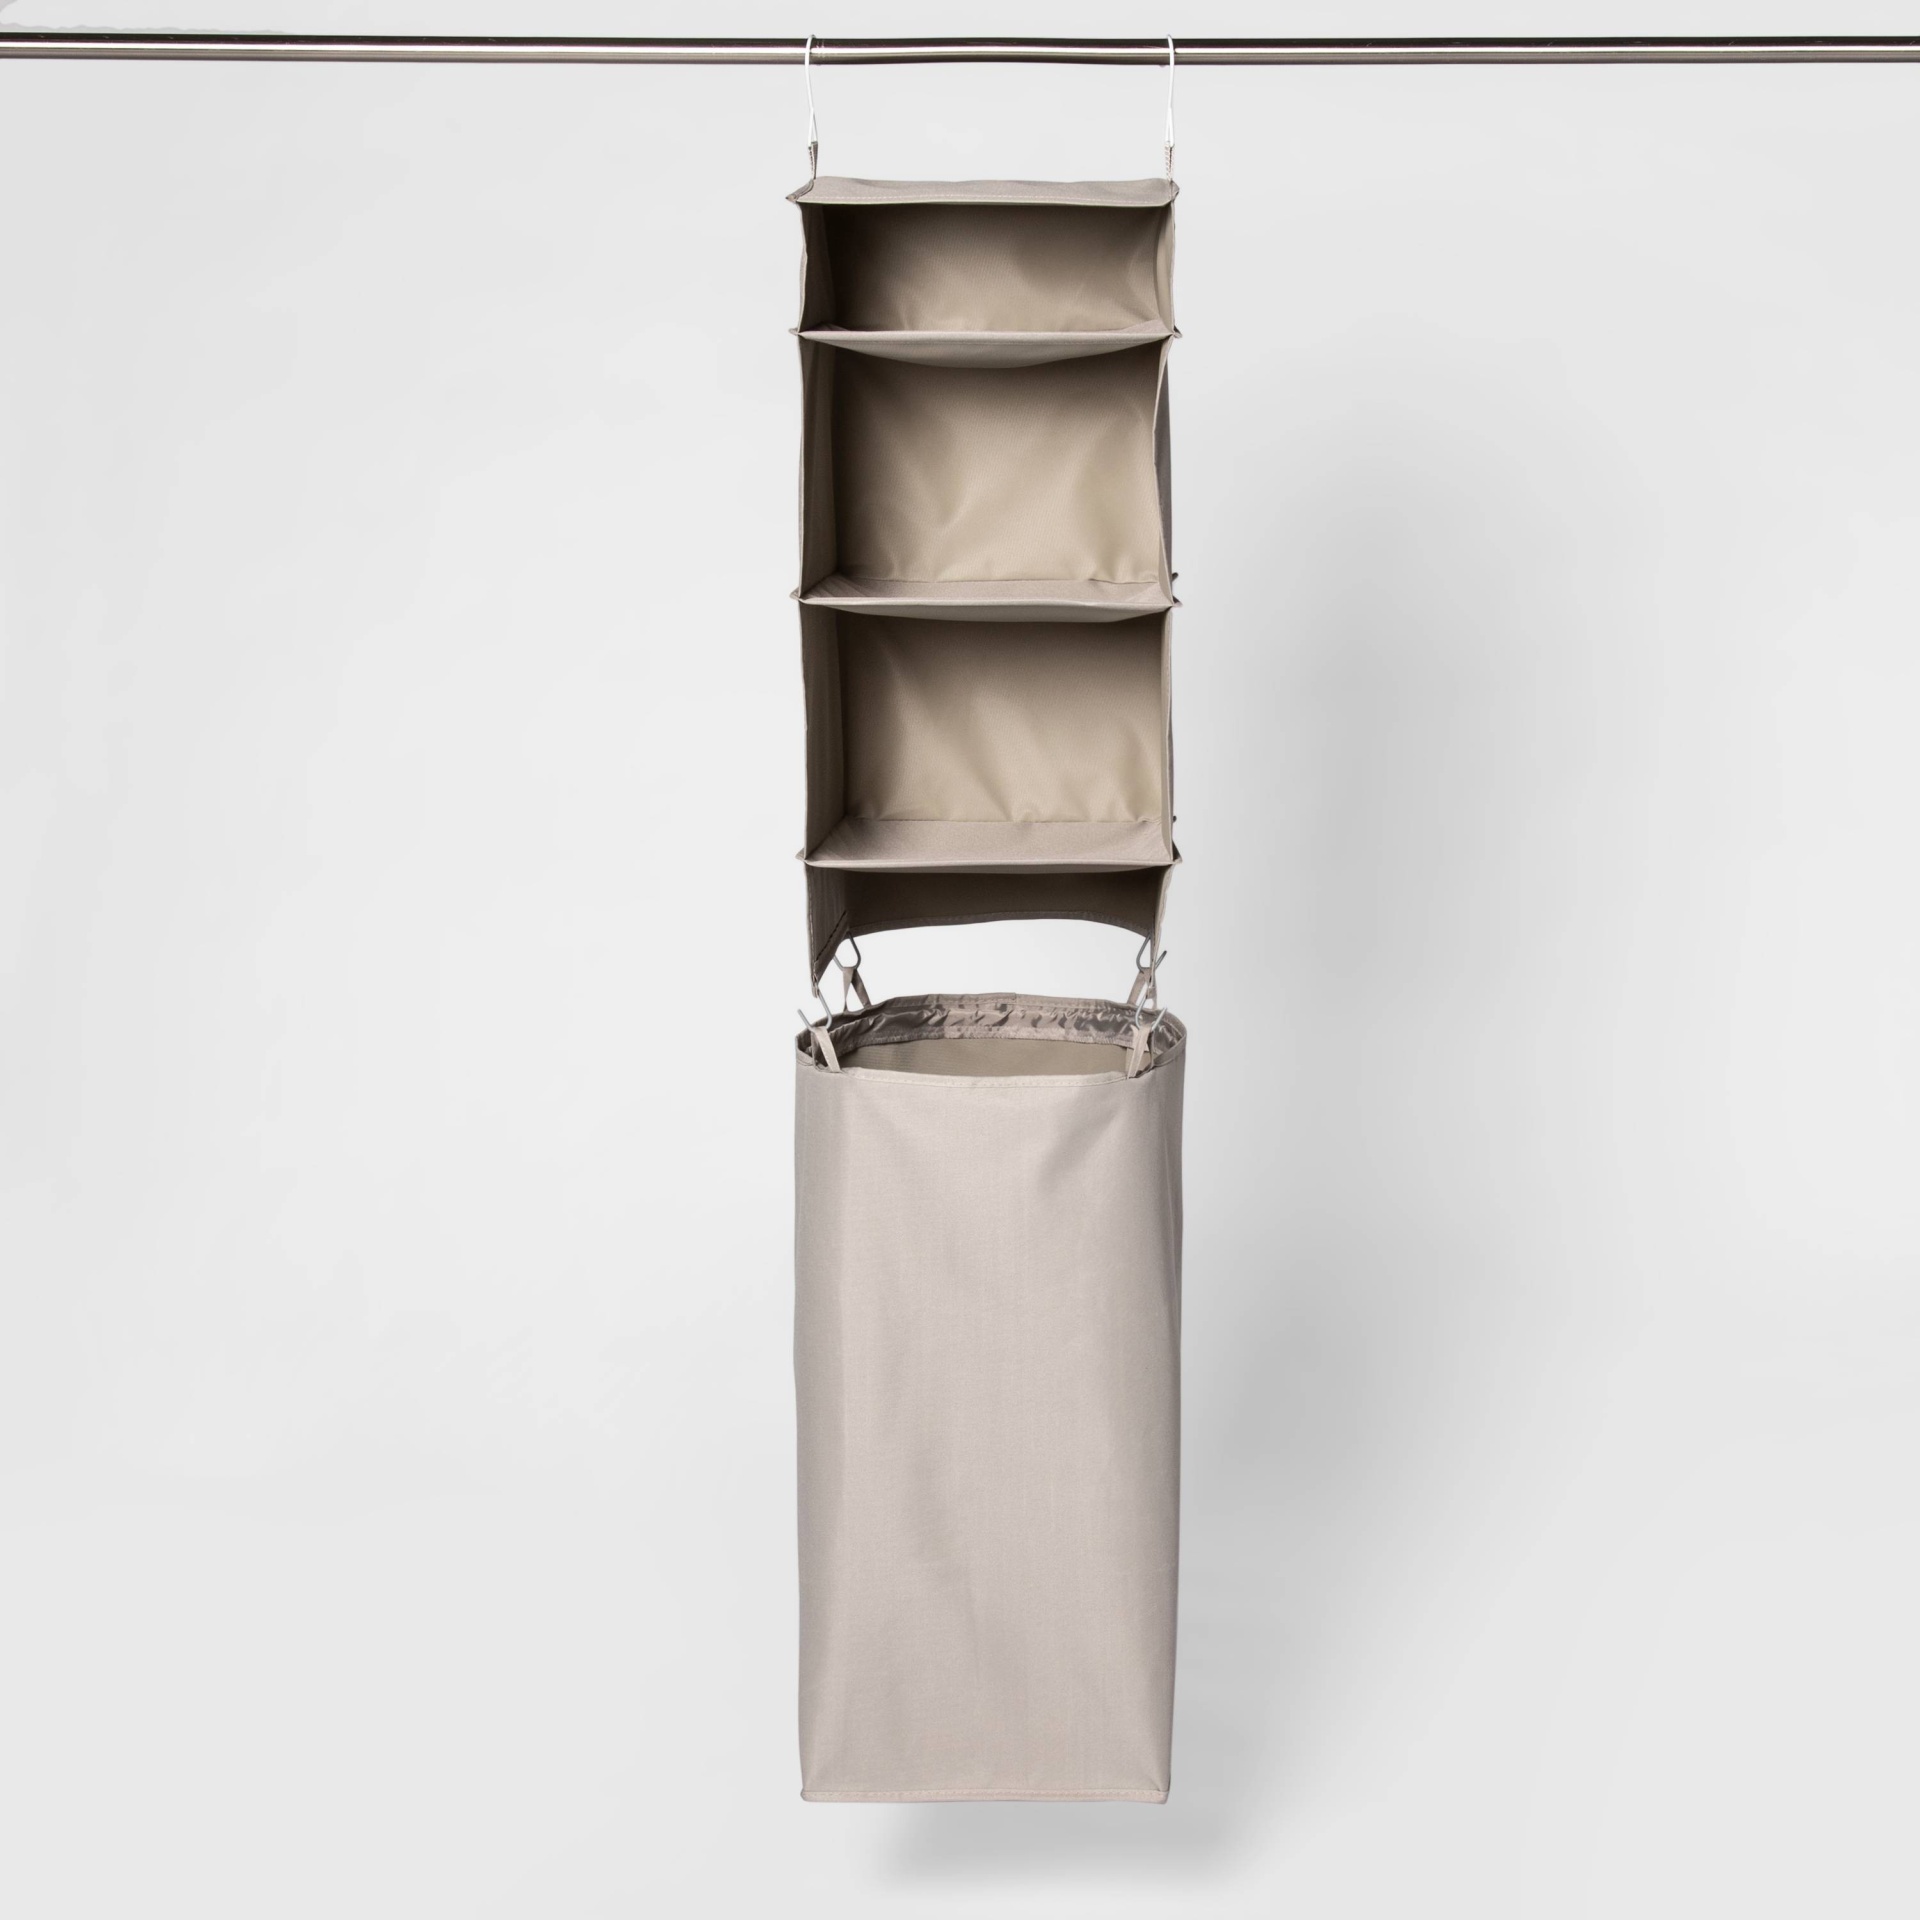 Hanging Closet Organizer with Detachable Hamper Gray - Room Essentials 1 ct